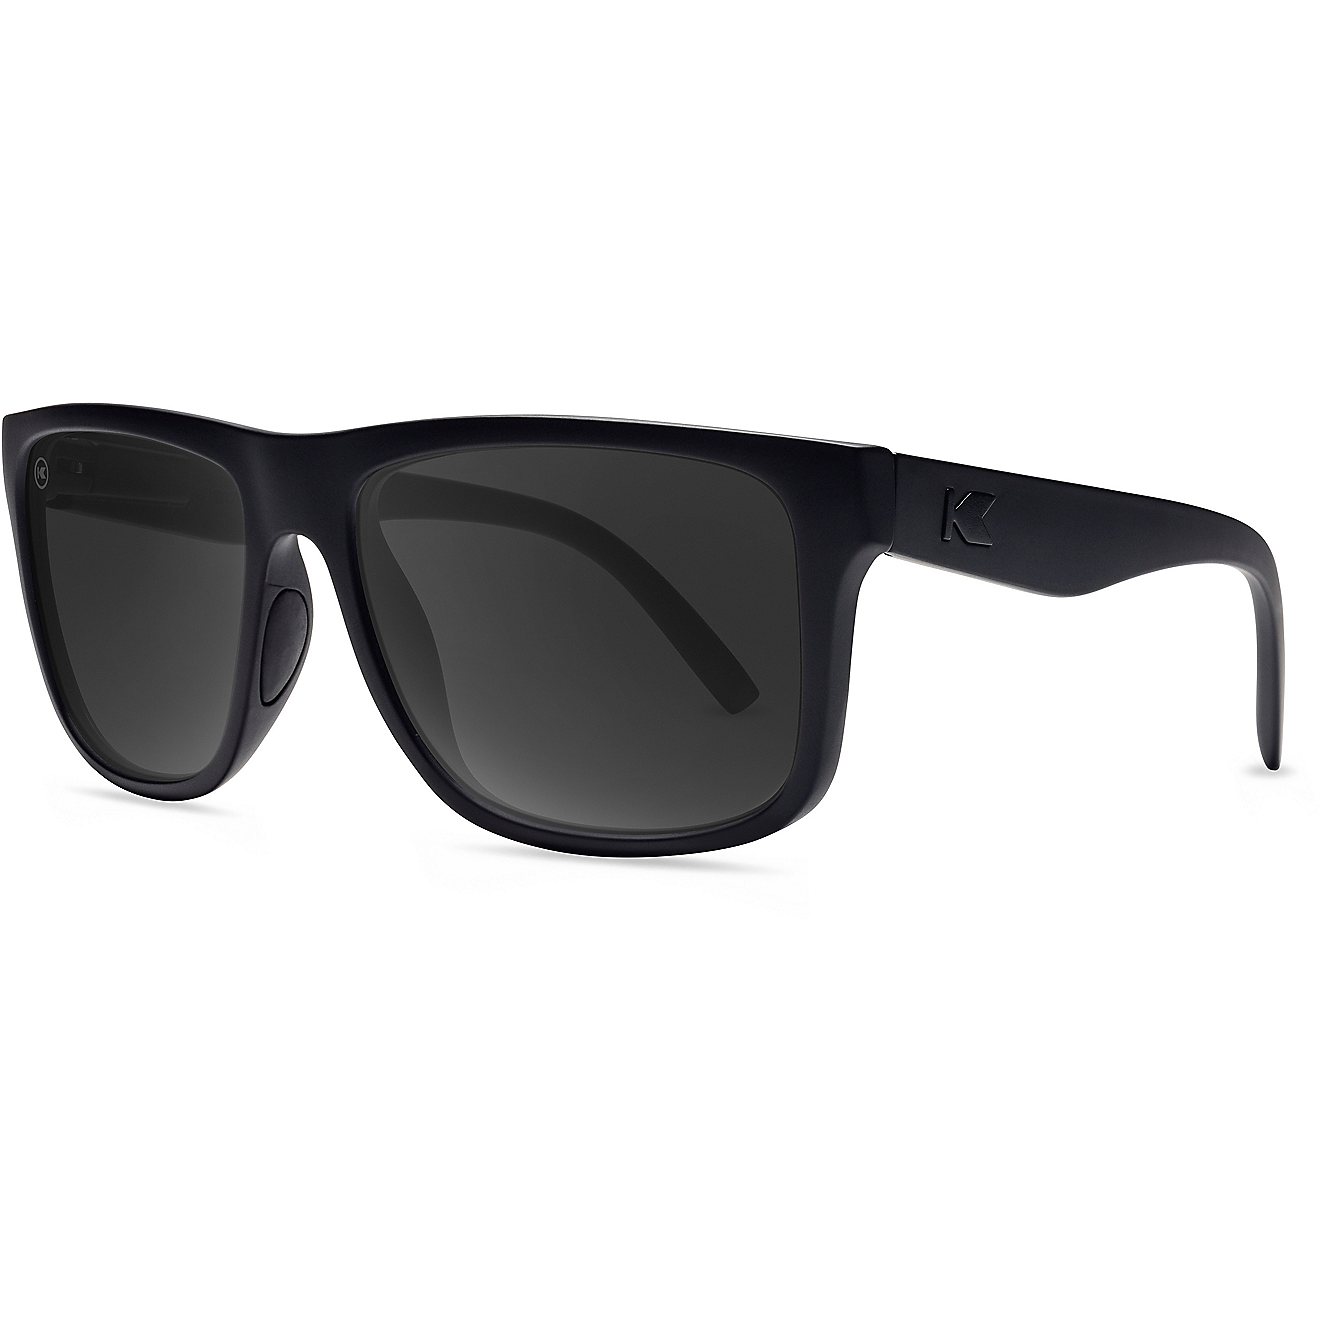 Knockaround Torrey Pines Sport Sunglasses                                                                                        - view number 1